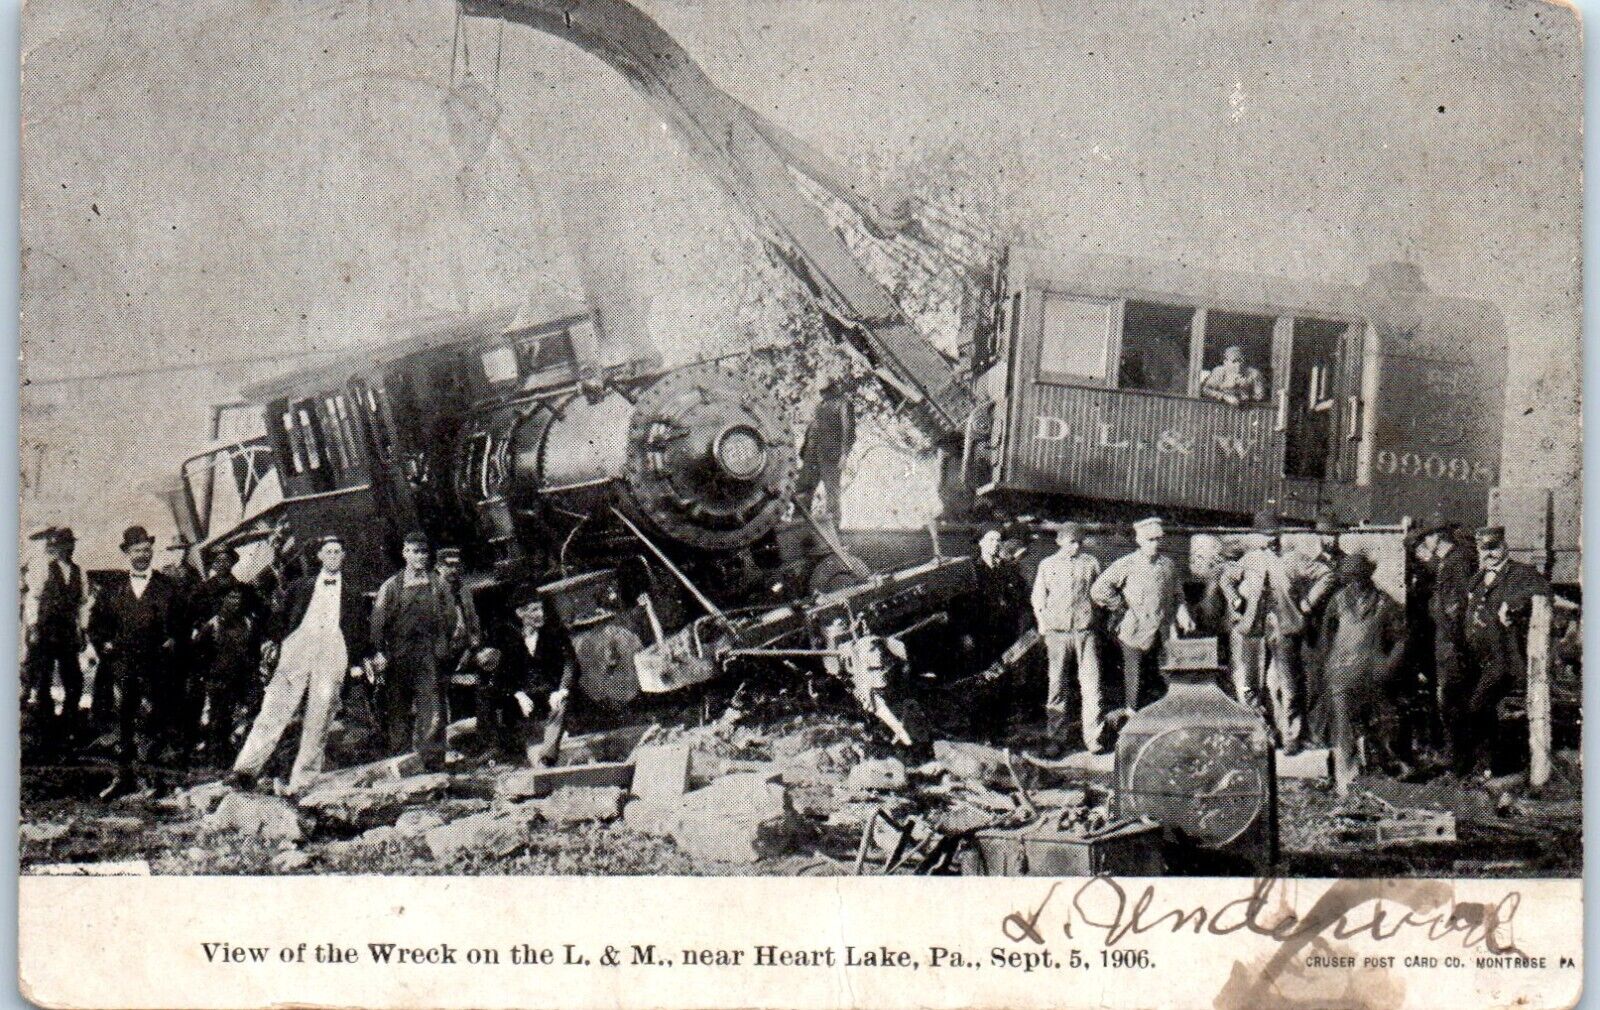 1906 Train Wreck on the L. & M. near Heart Lake Pennsylvania 9-5-1906 Postcard